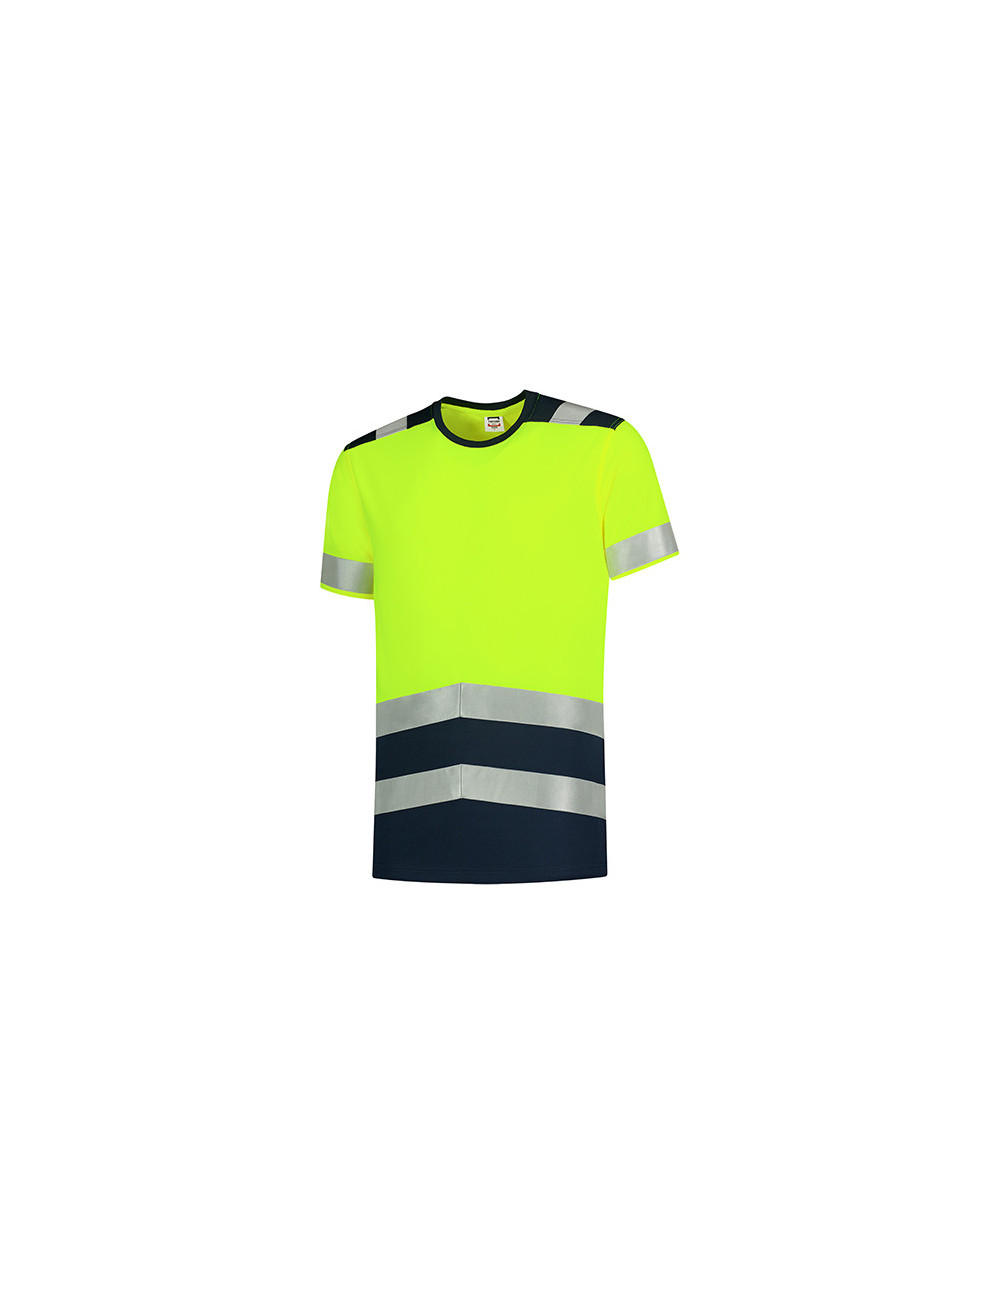 Koszulka unisex t-shirt high vis bicolor t01 fluorescencyjny żółty Adler Tricorp